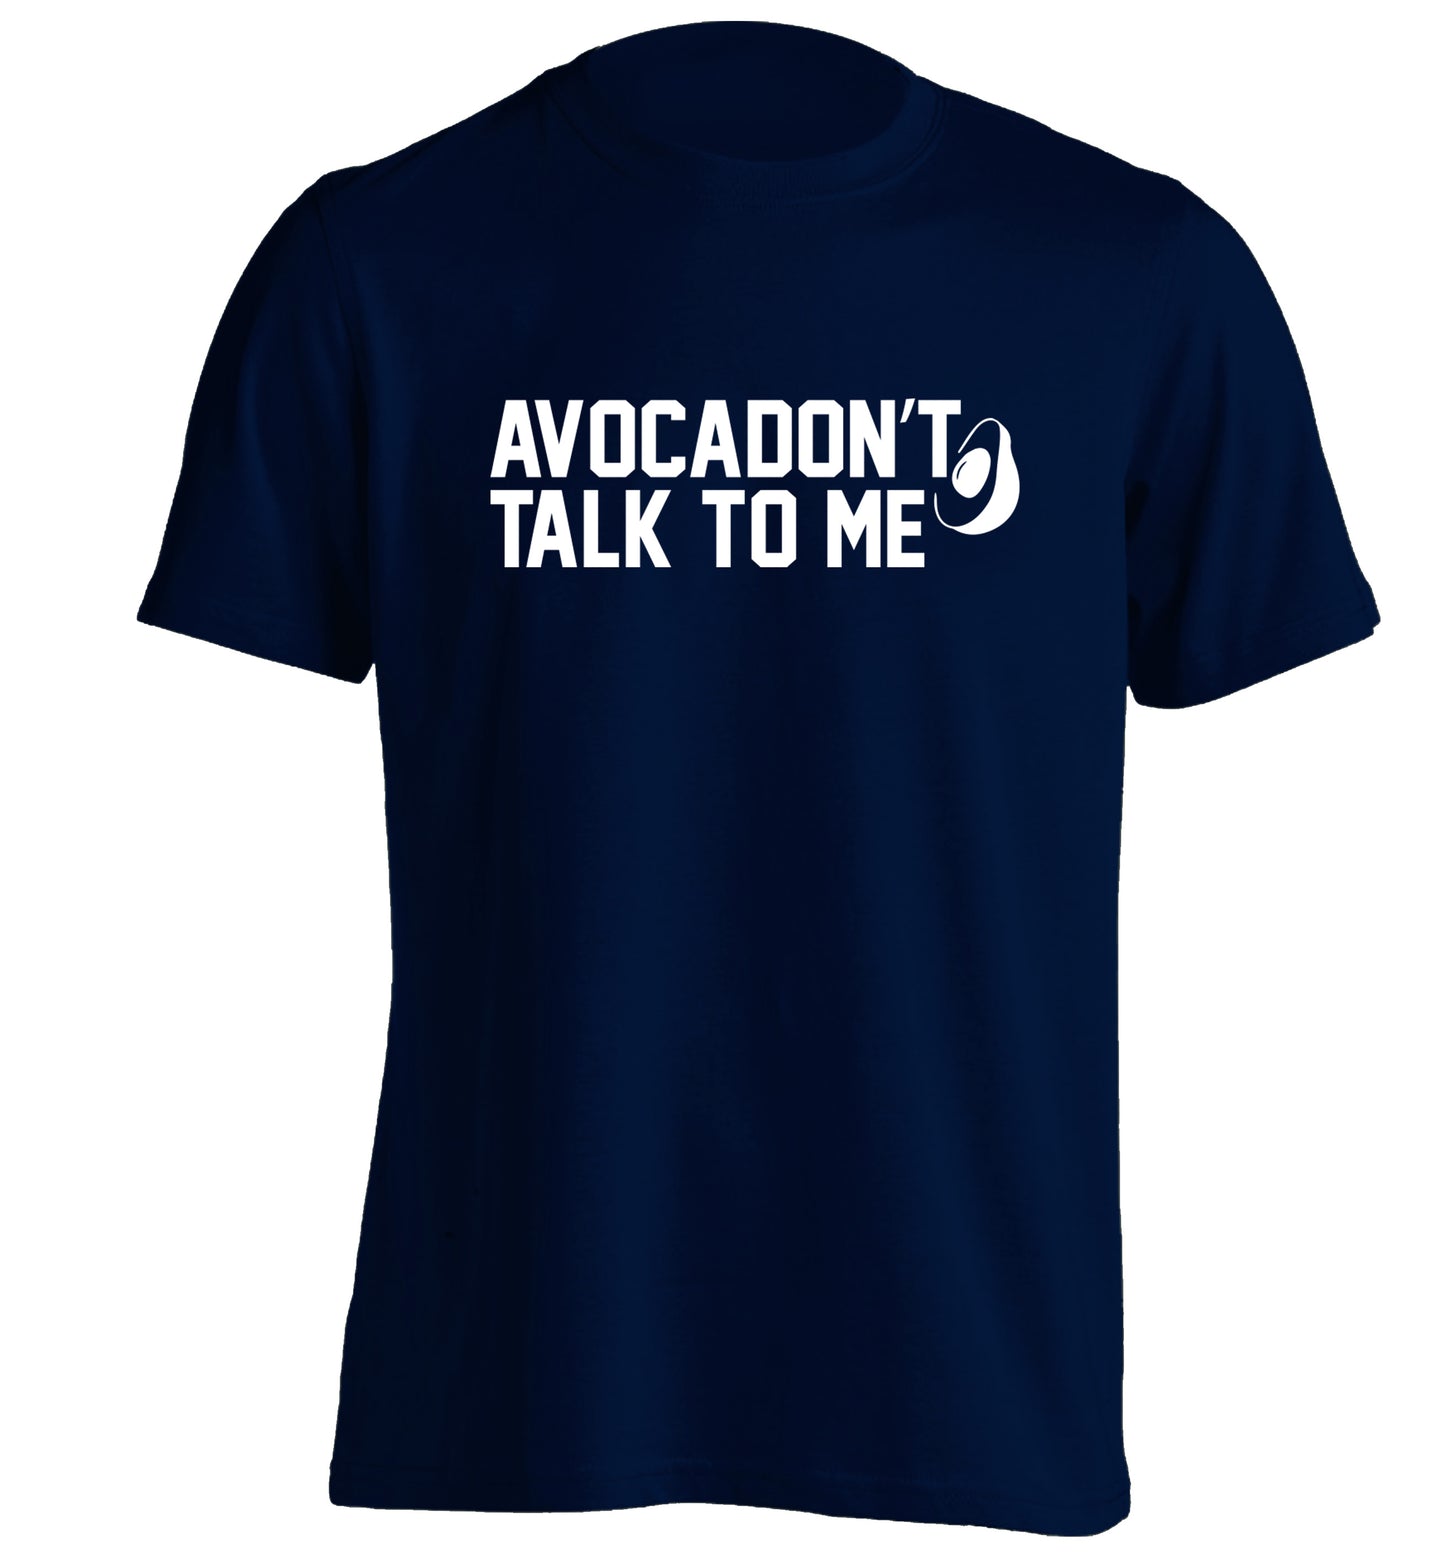 Avocadon't talk to me adults unisex navy Tshirt 2XL